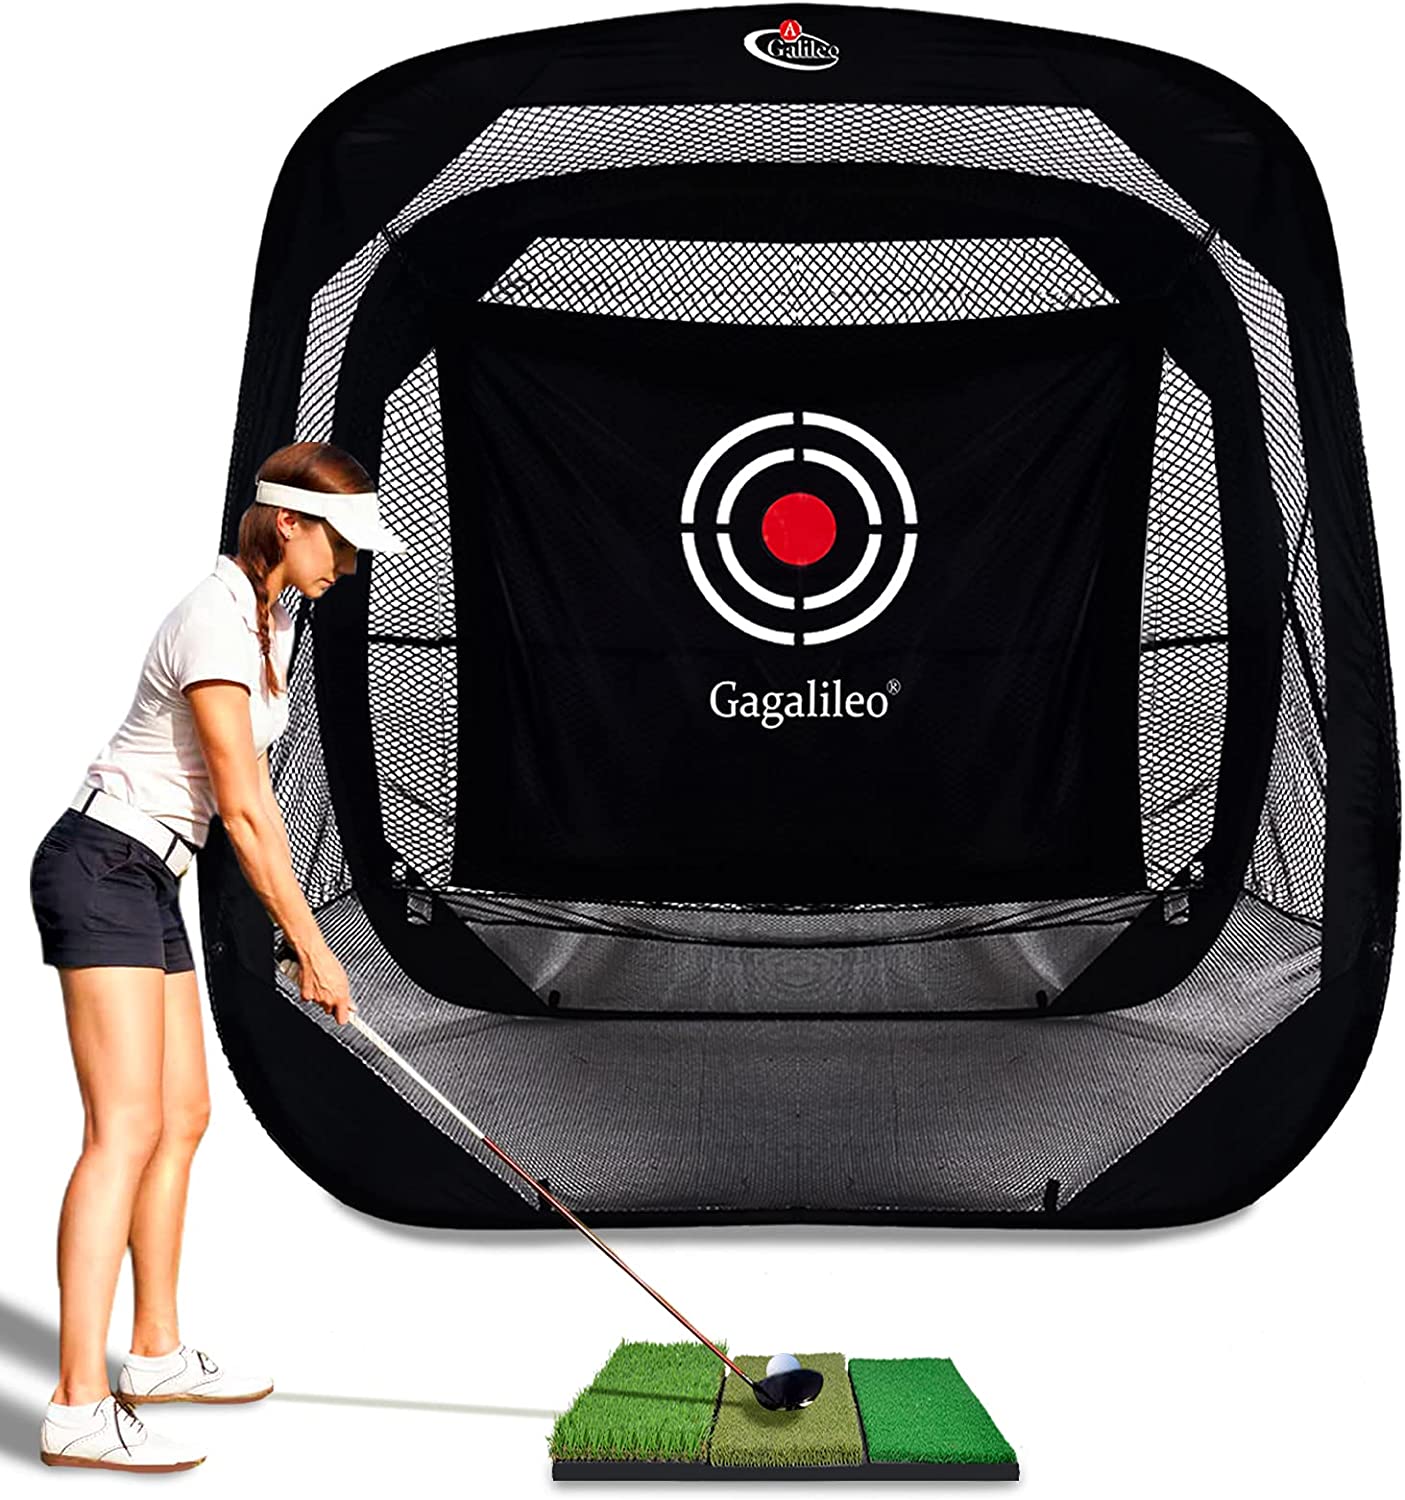 4x5 Golf Target Cloth/ Target Replacement for 7X7X4FT Pop-up Golf Net